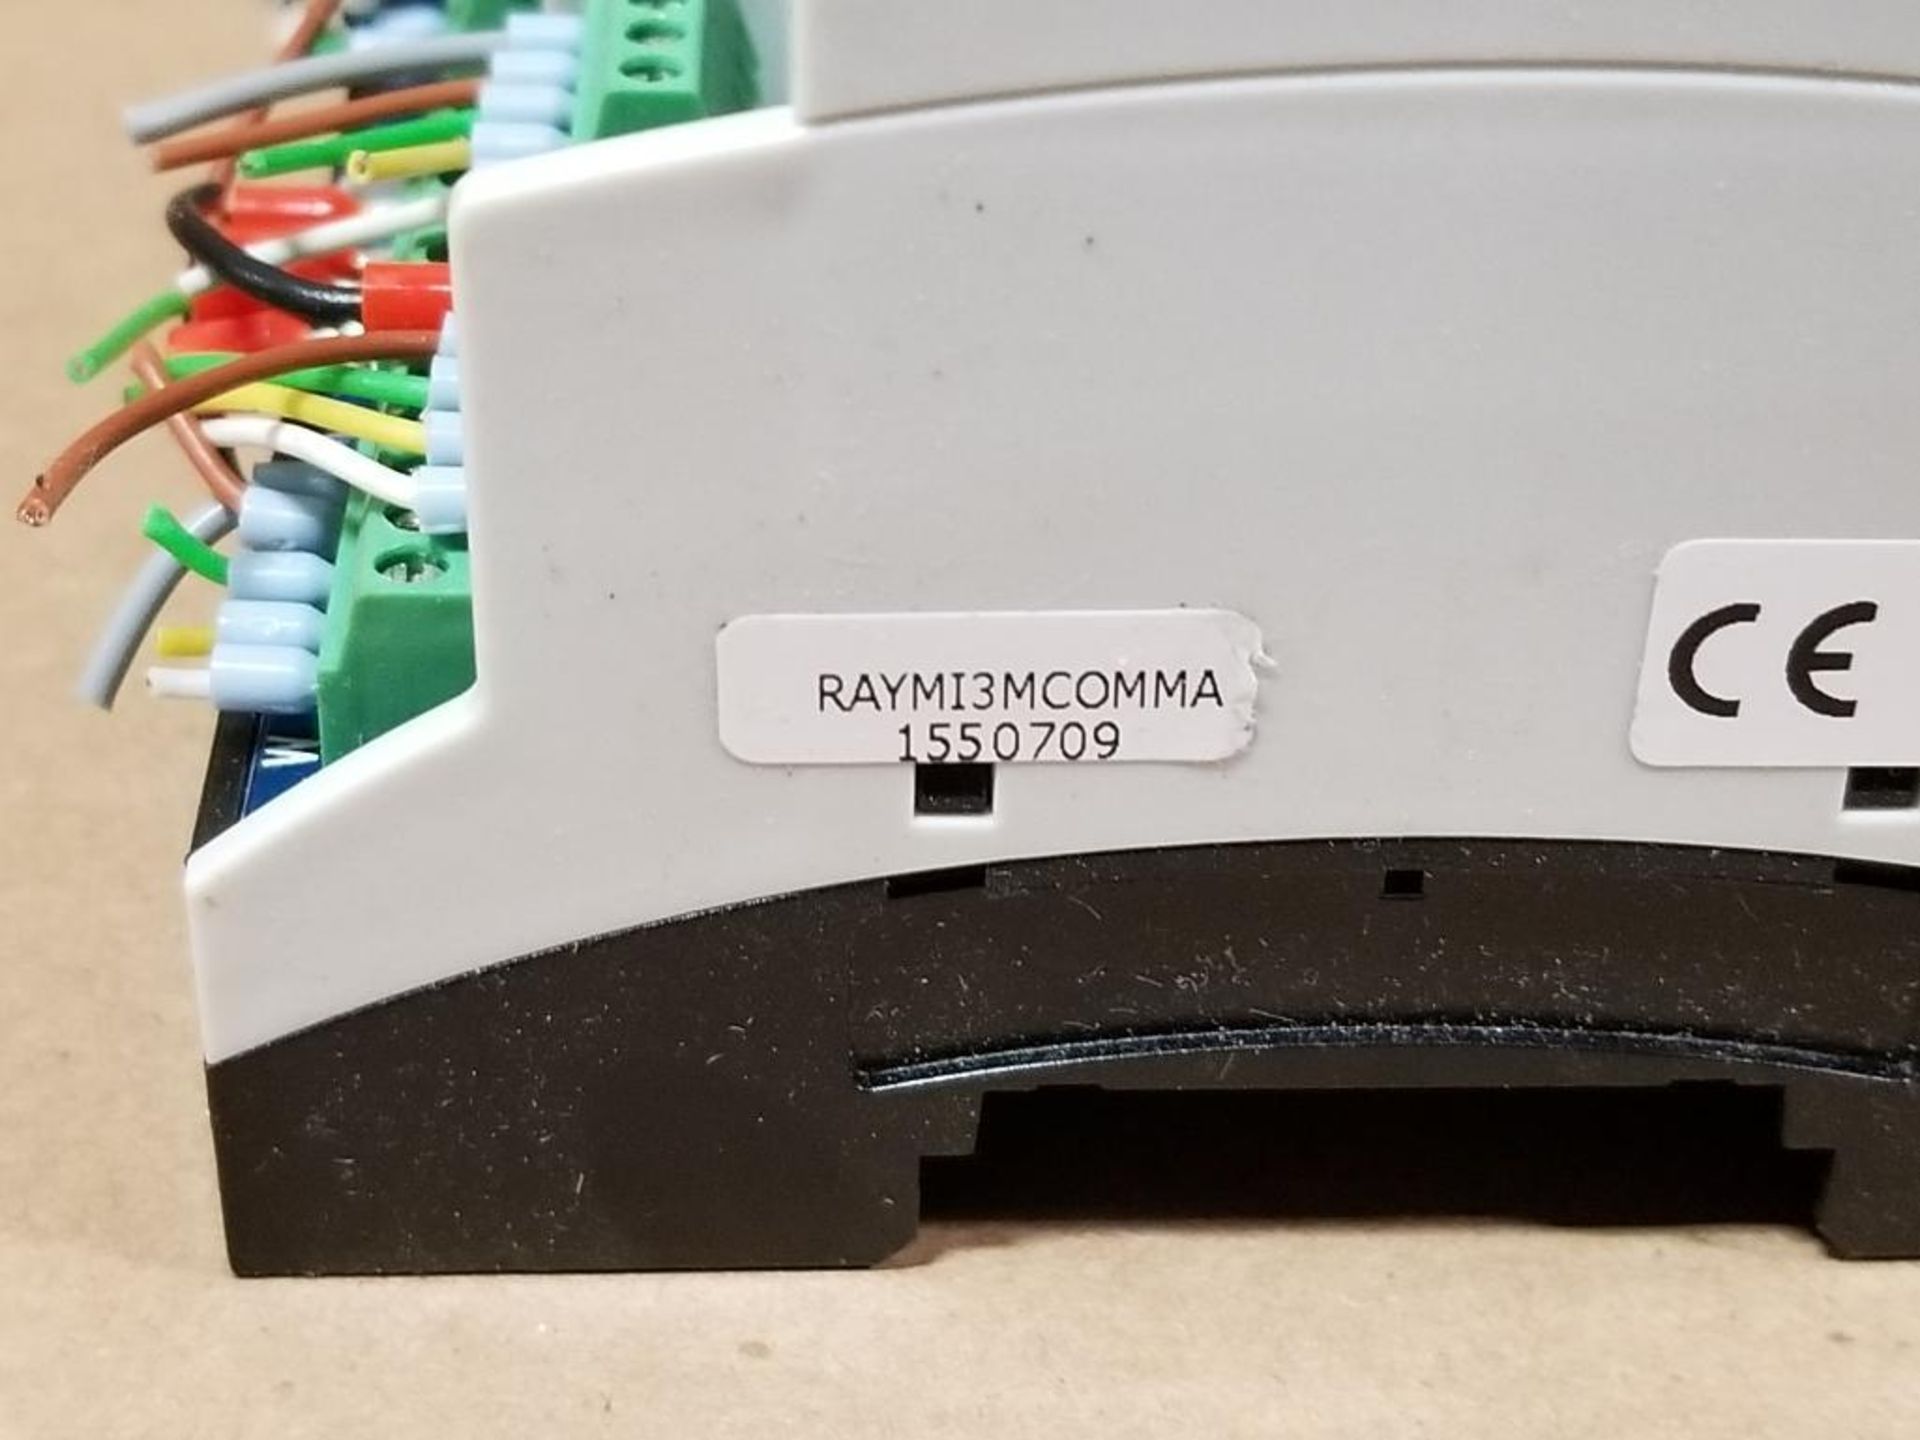 Raytek MI3-M RAYMI3MCOMMA infrared thermometer. - Image 6 of 6